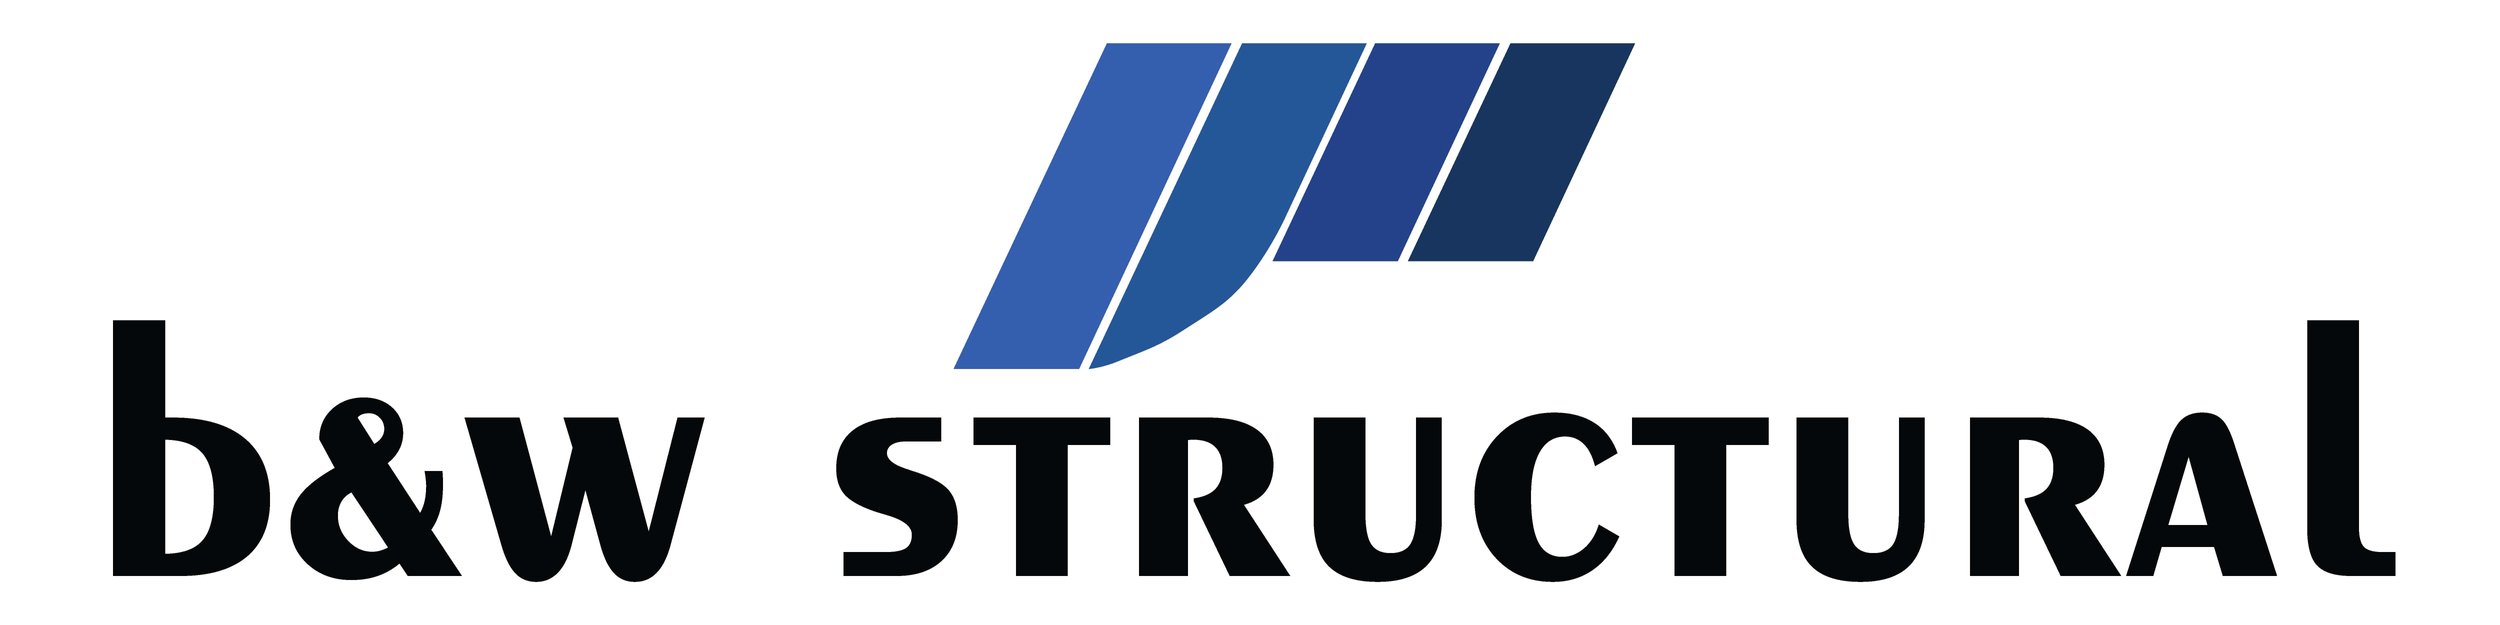 b&w structural logo.jpg